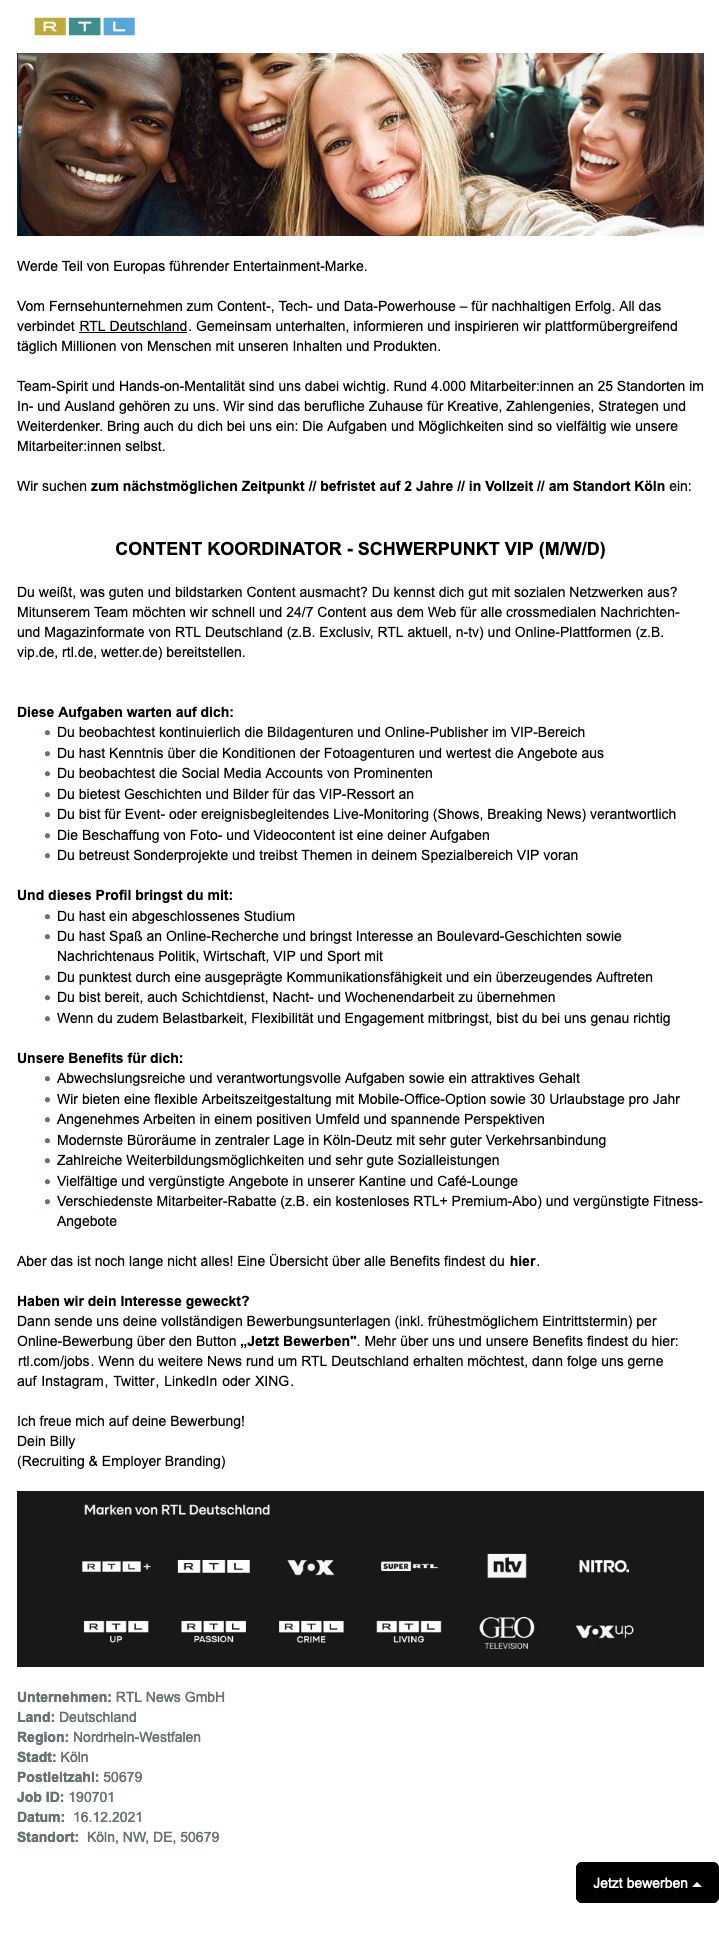 Content Koordinator - Schwerpunkt VIP (m/w/d) (RTL NEWS)